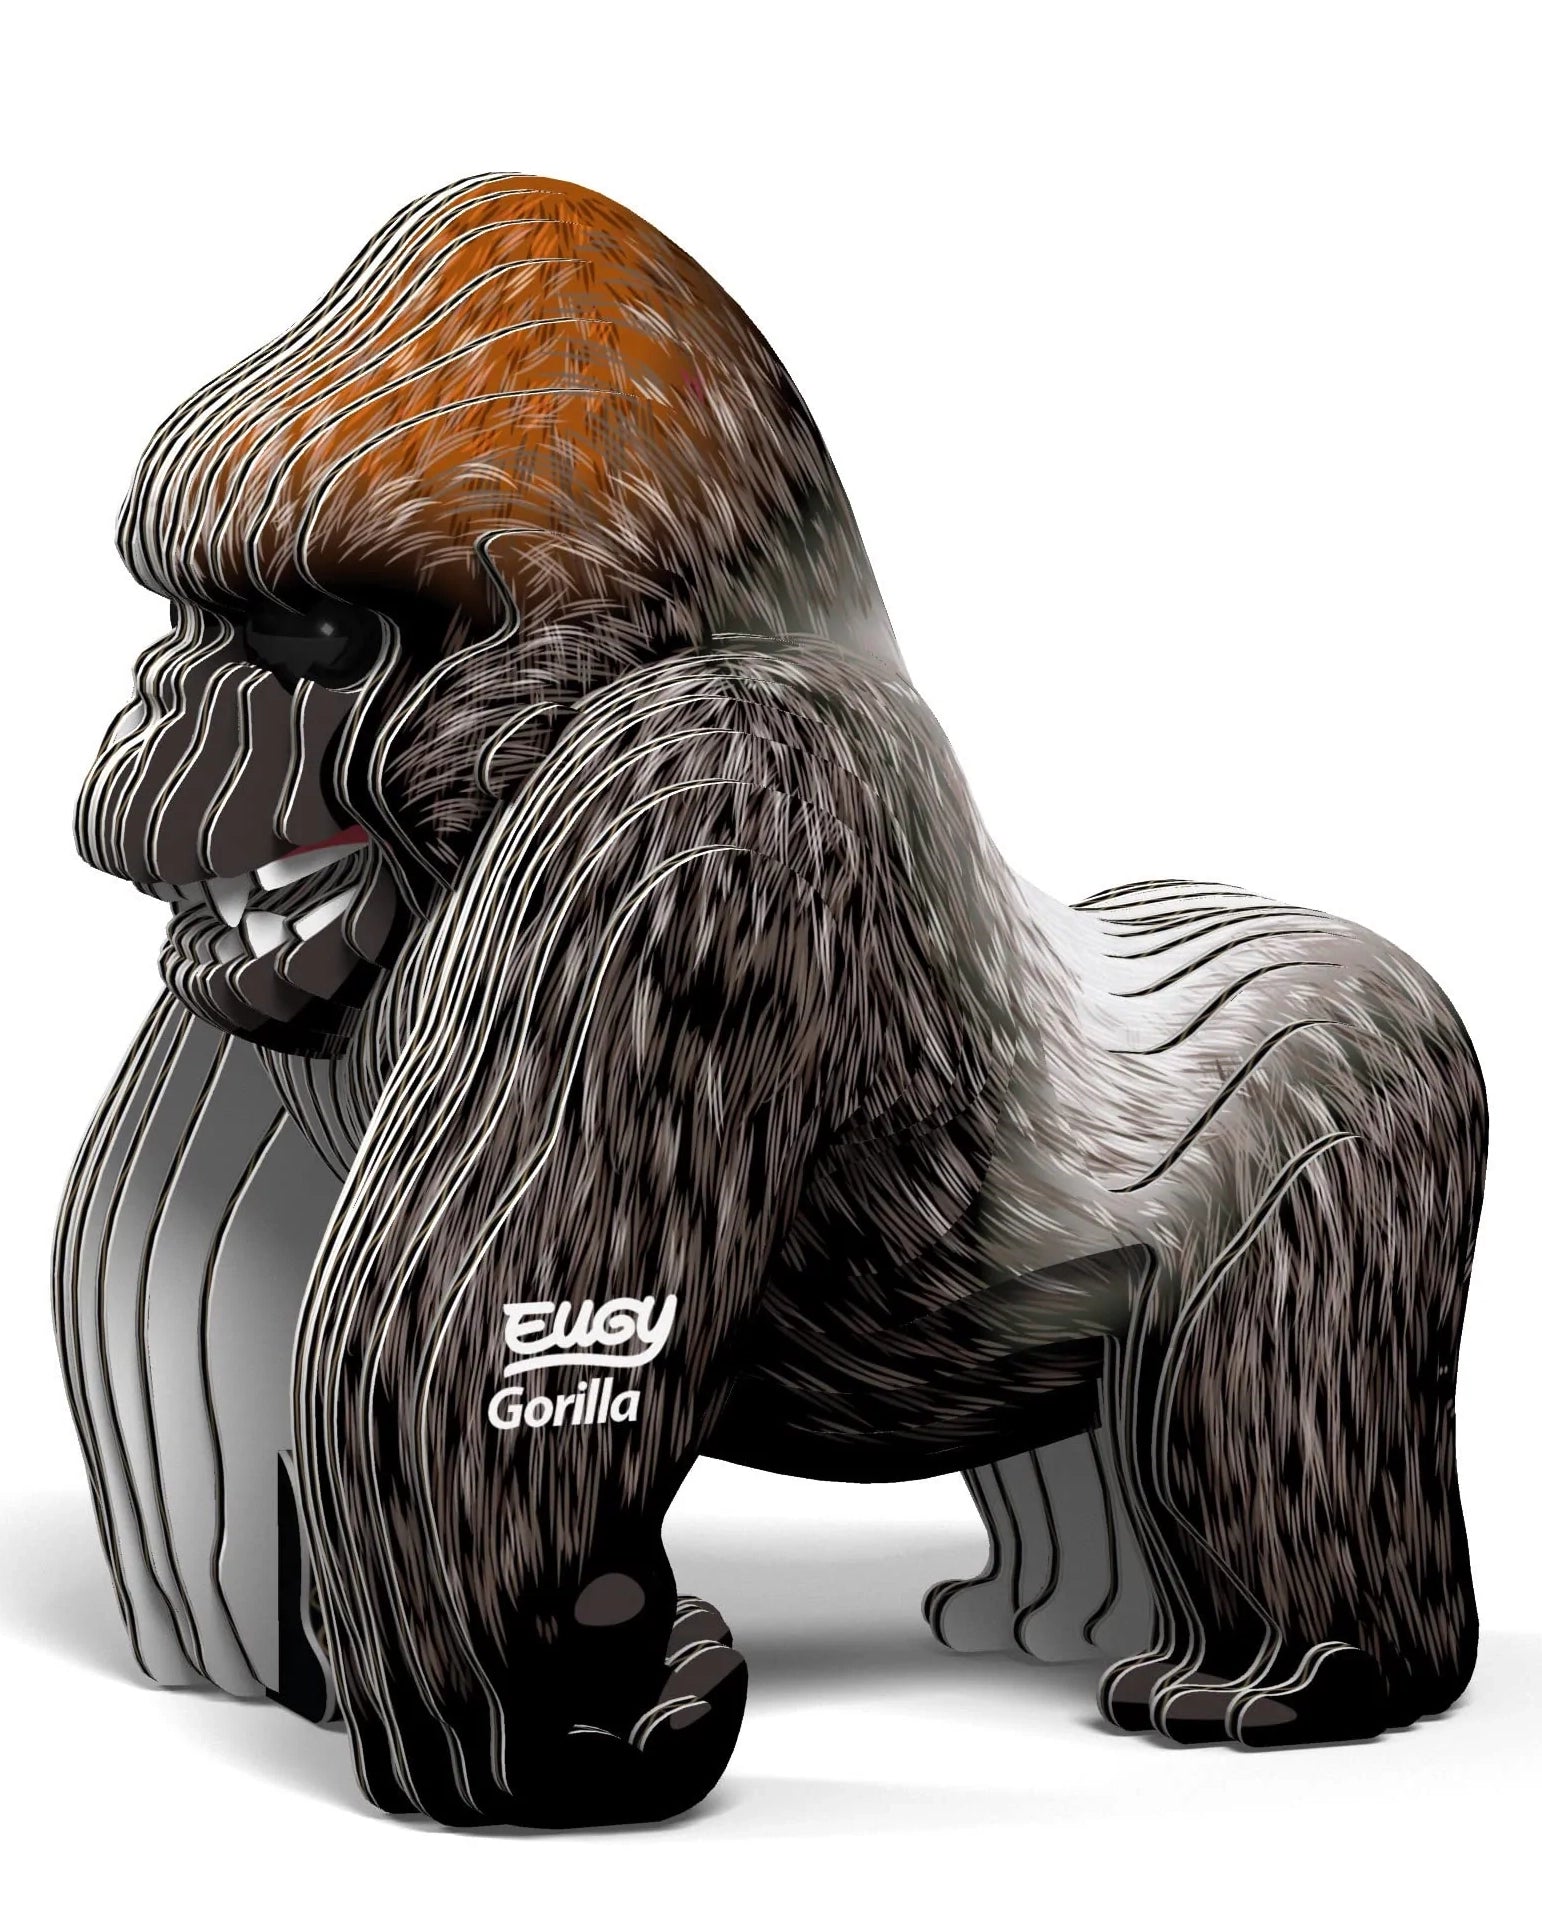 Eugy Gorilla 3D Cardboard Model Kit